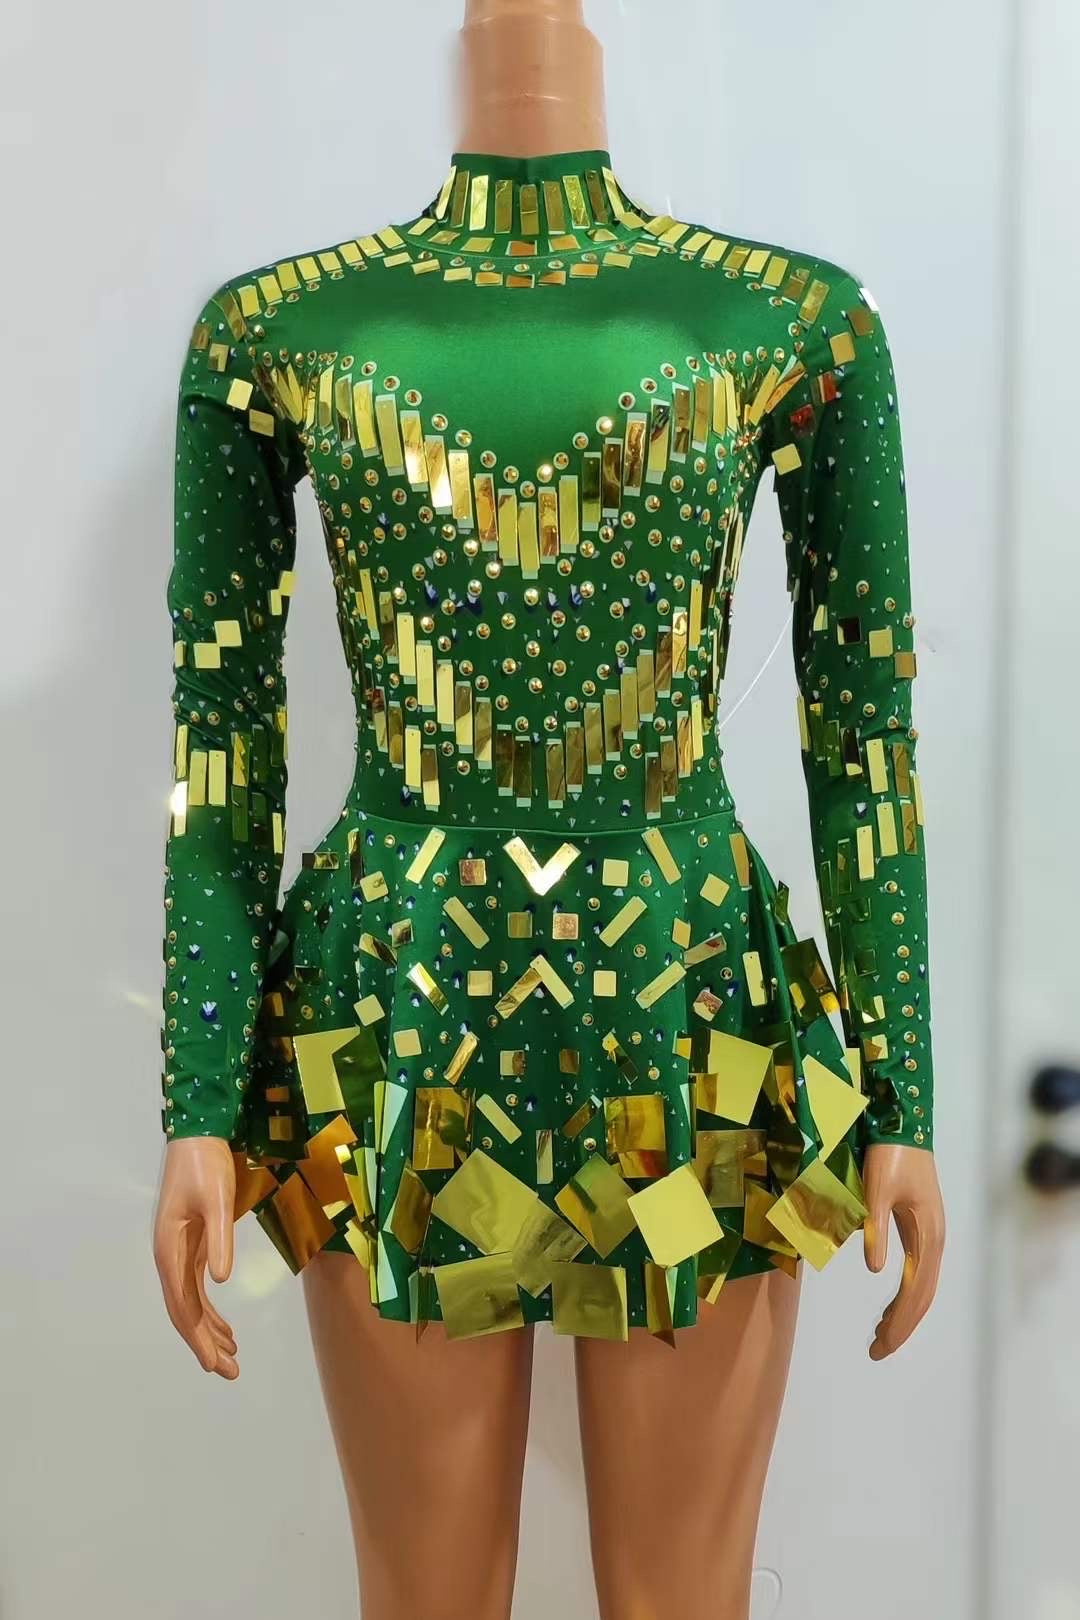 Disco Green and Gold remix dress